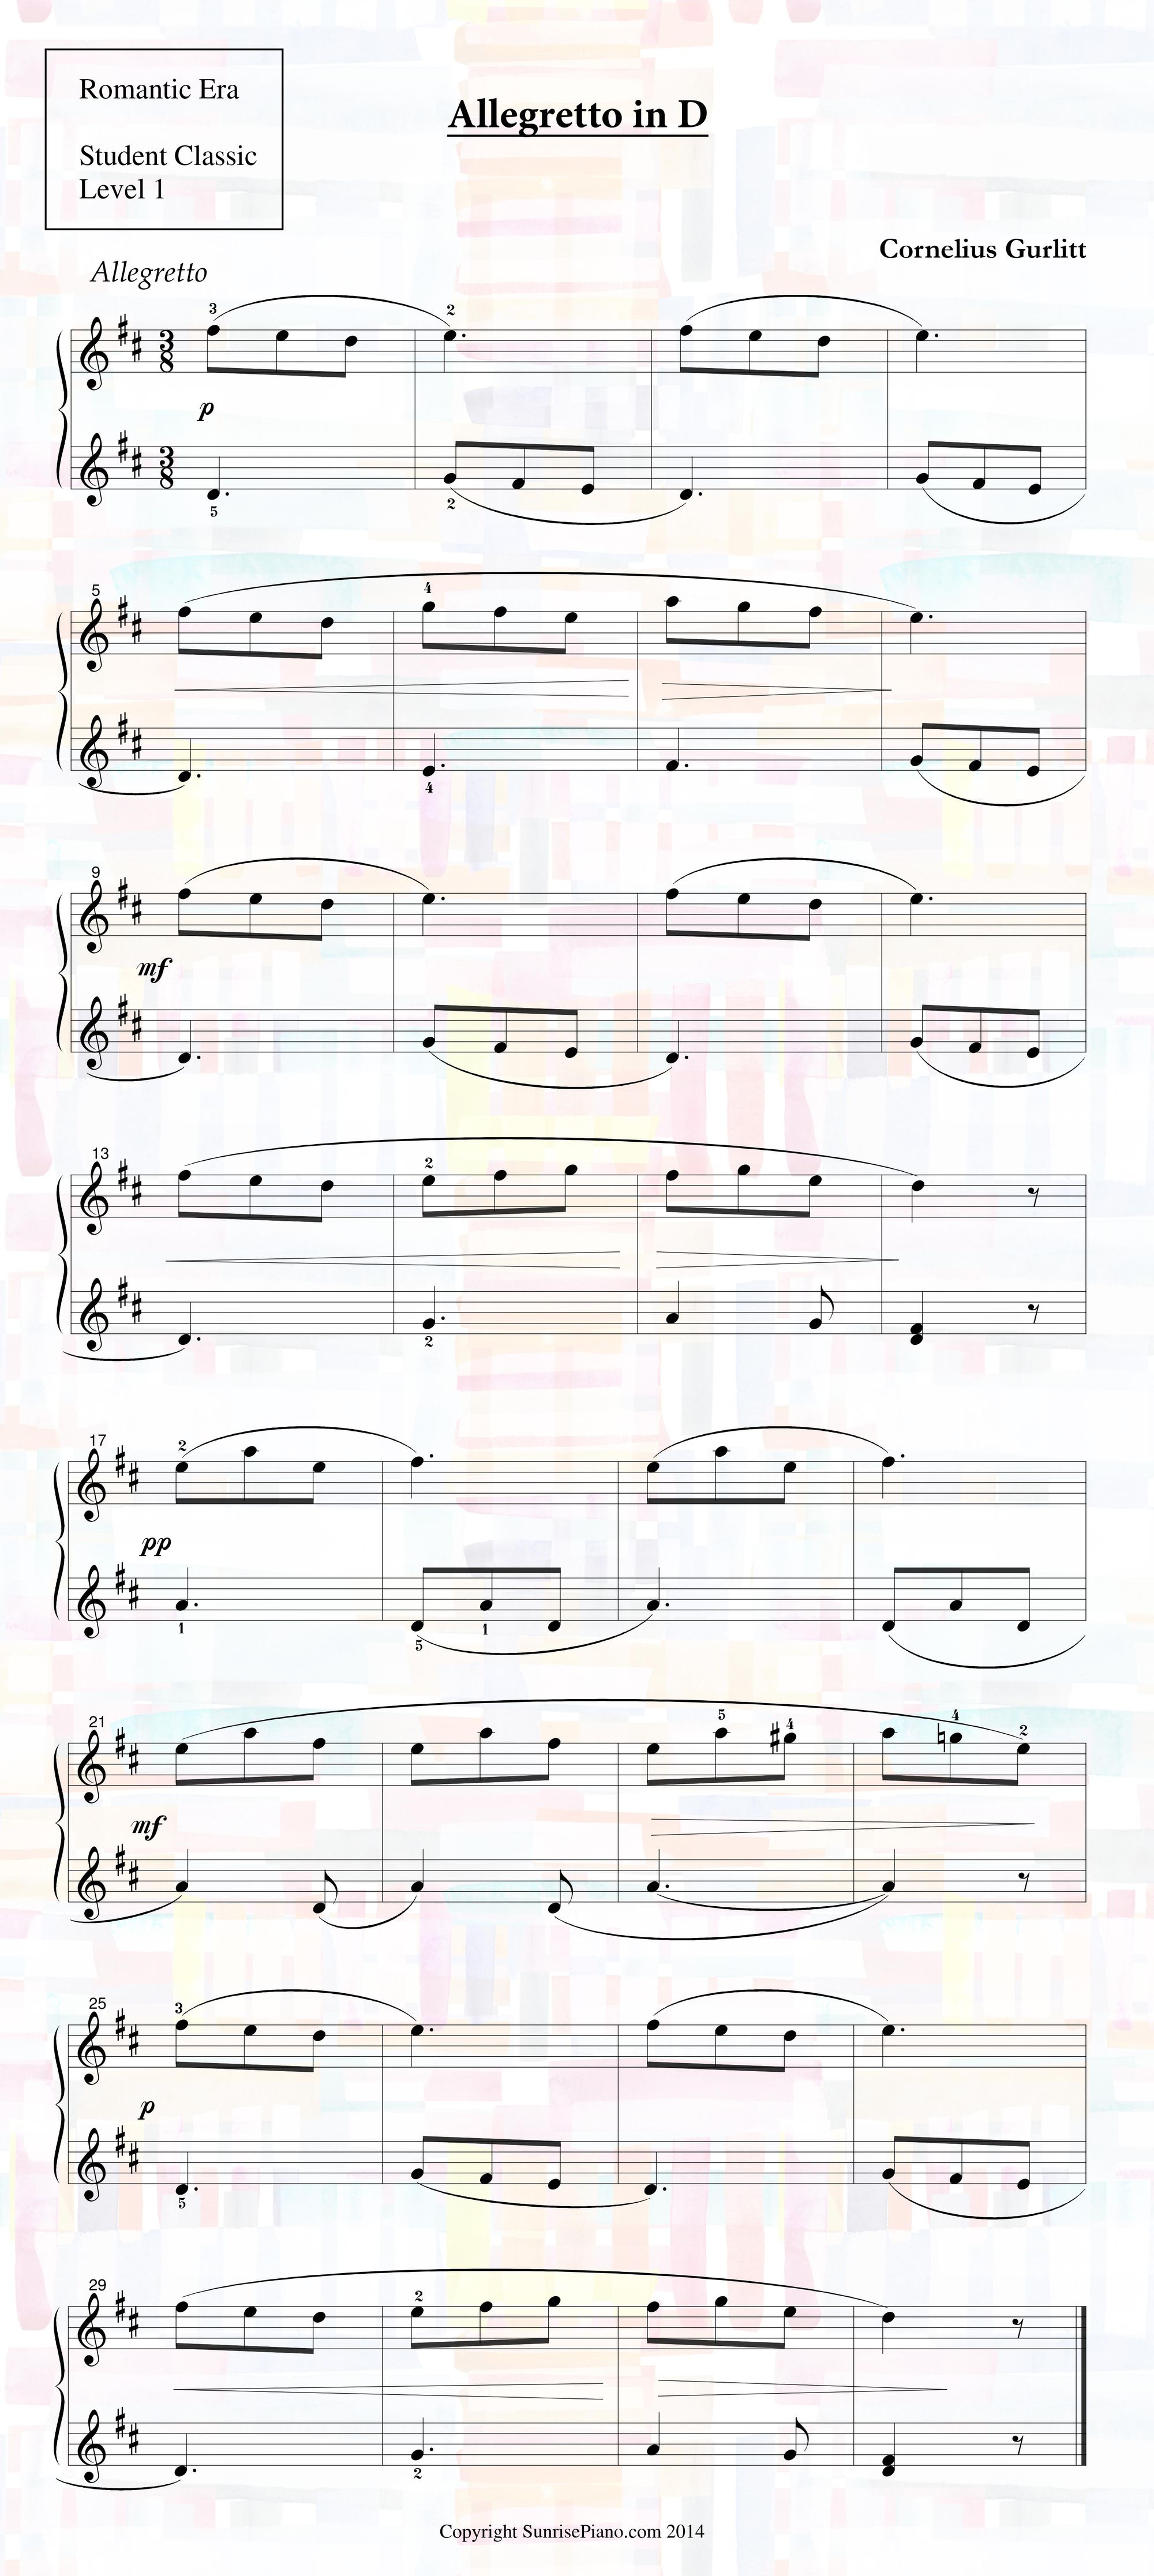 Cornelius Gurlitt - Allegretto in D - Piano Sheet Music